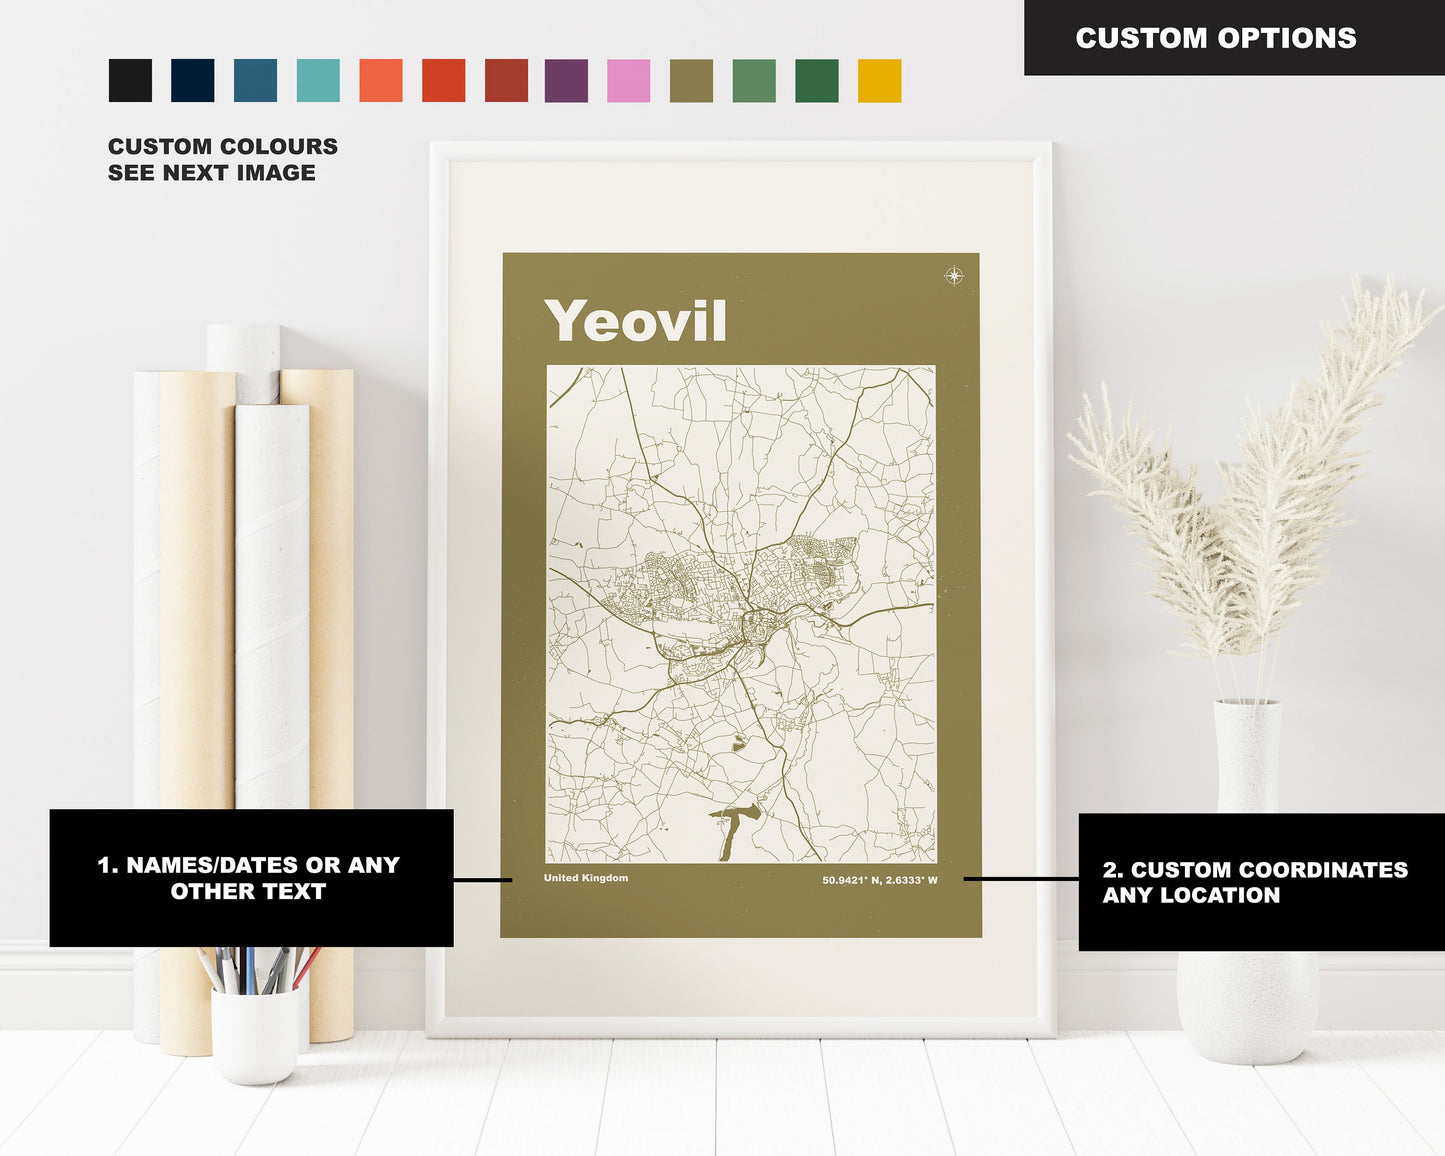 Yeovil Print - Map Print - Mid Century Modern  - Retro - Vintage - Contemporary - Yeovil Print - Map - Map Poster - Gift - Somerset